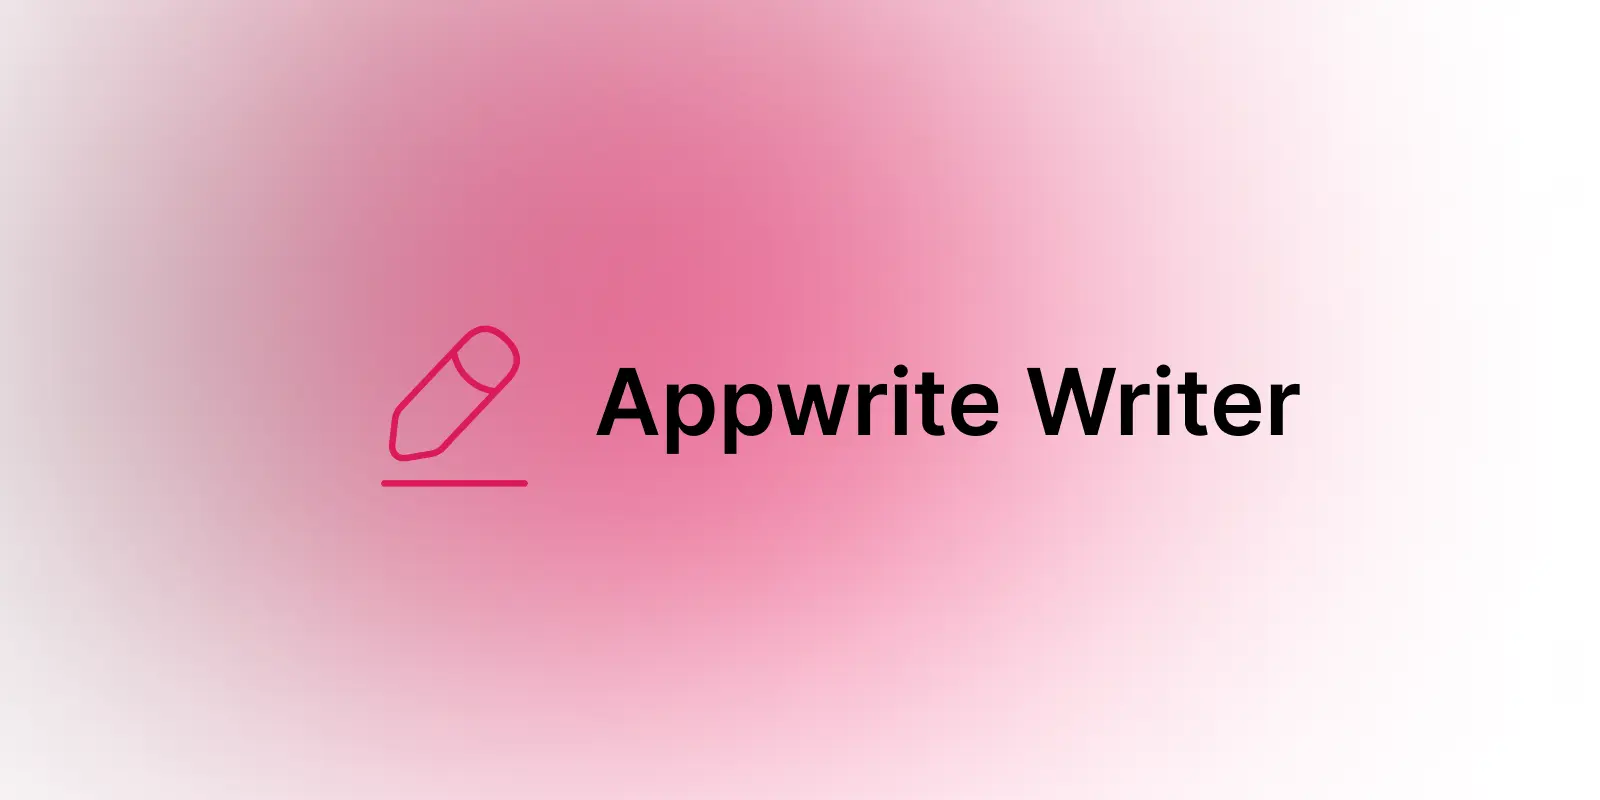 appwrite-writer